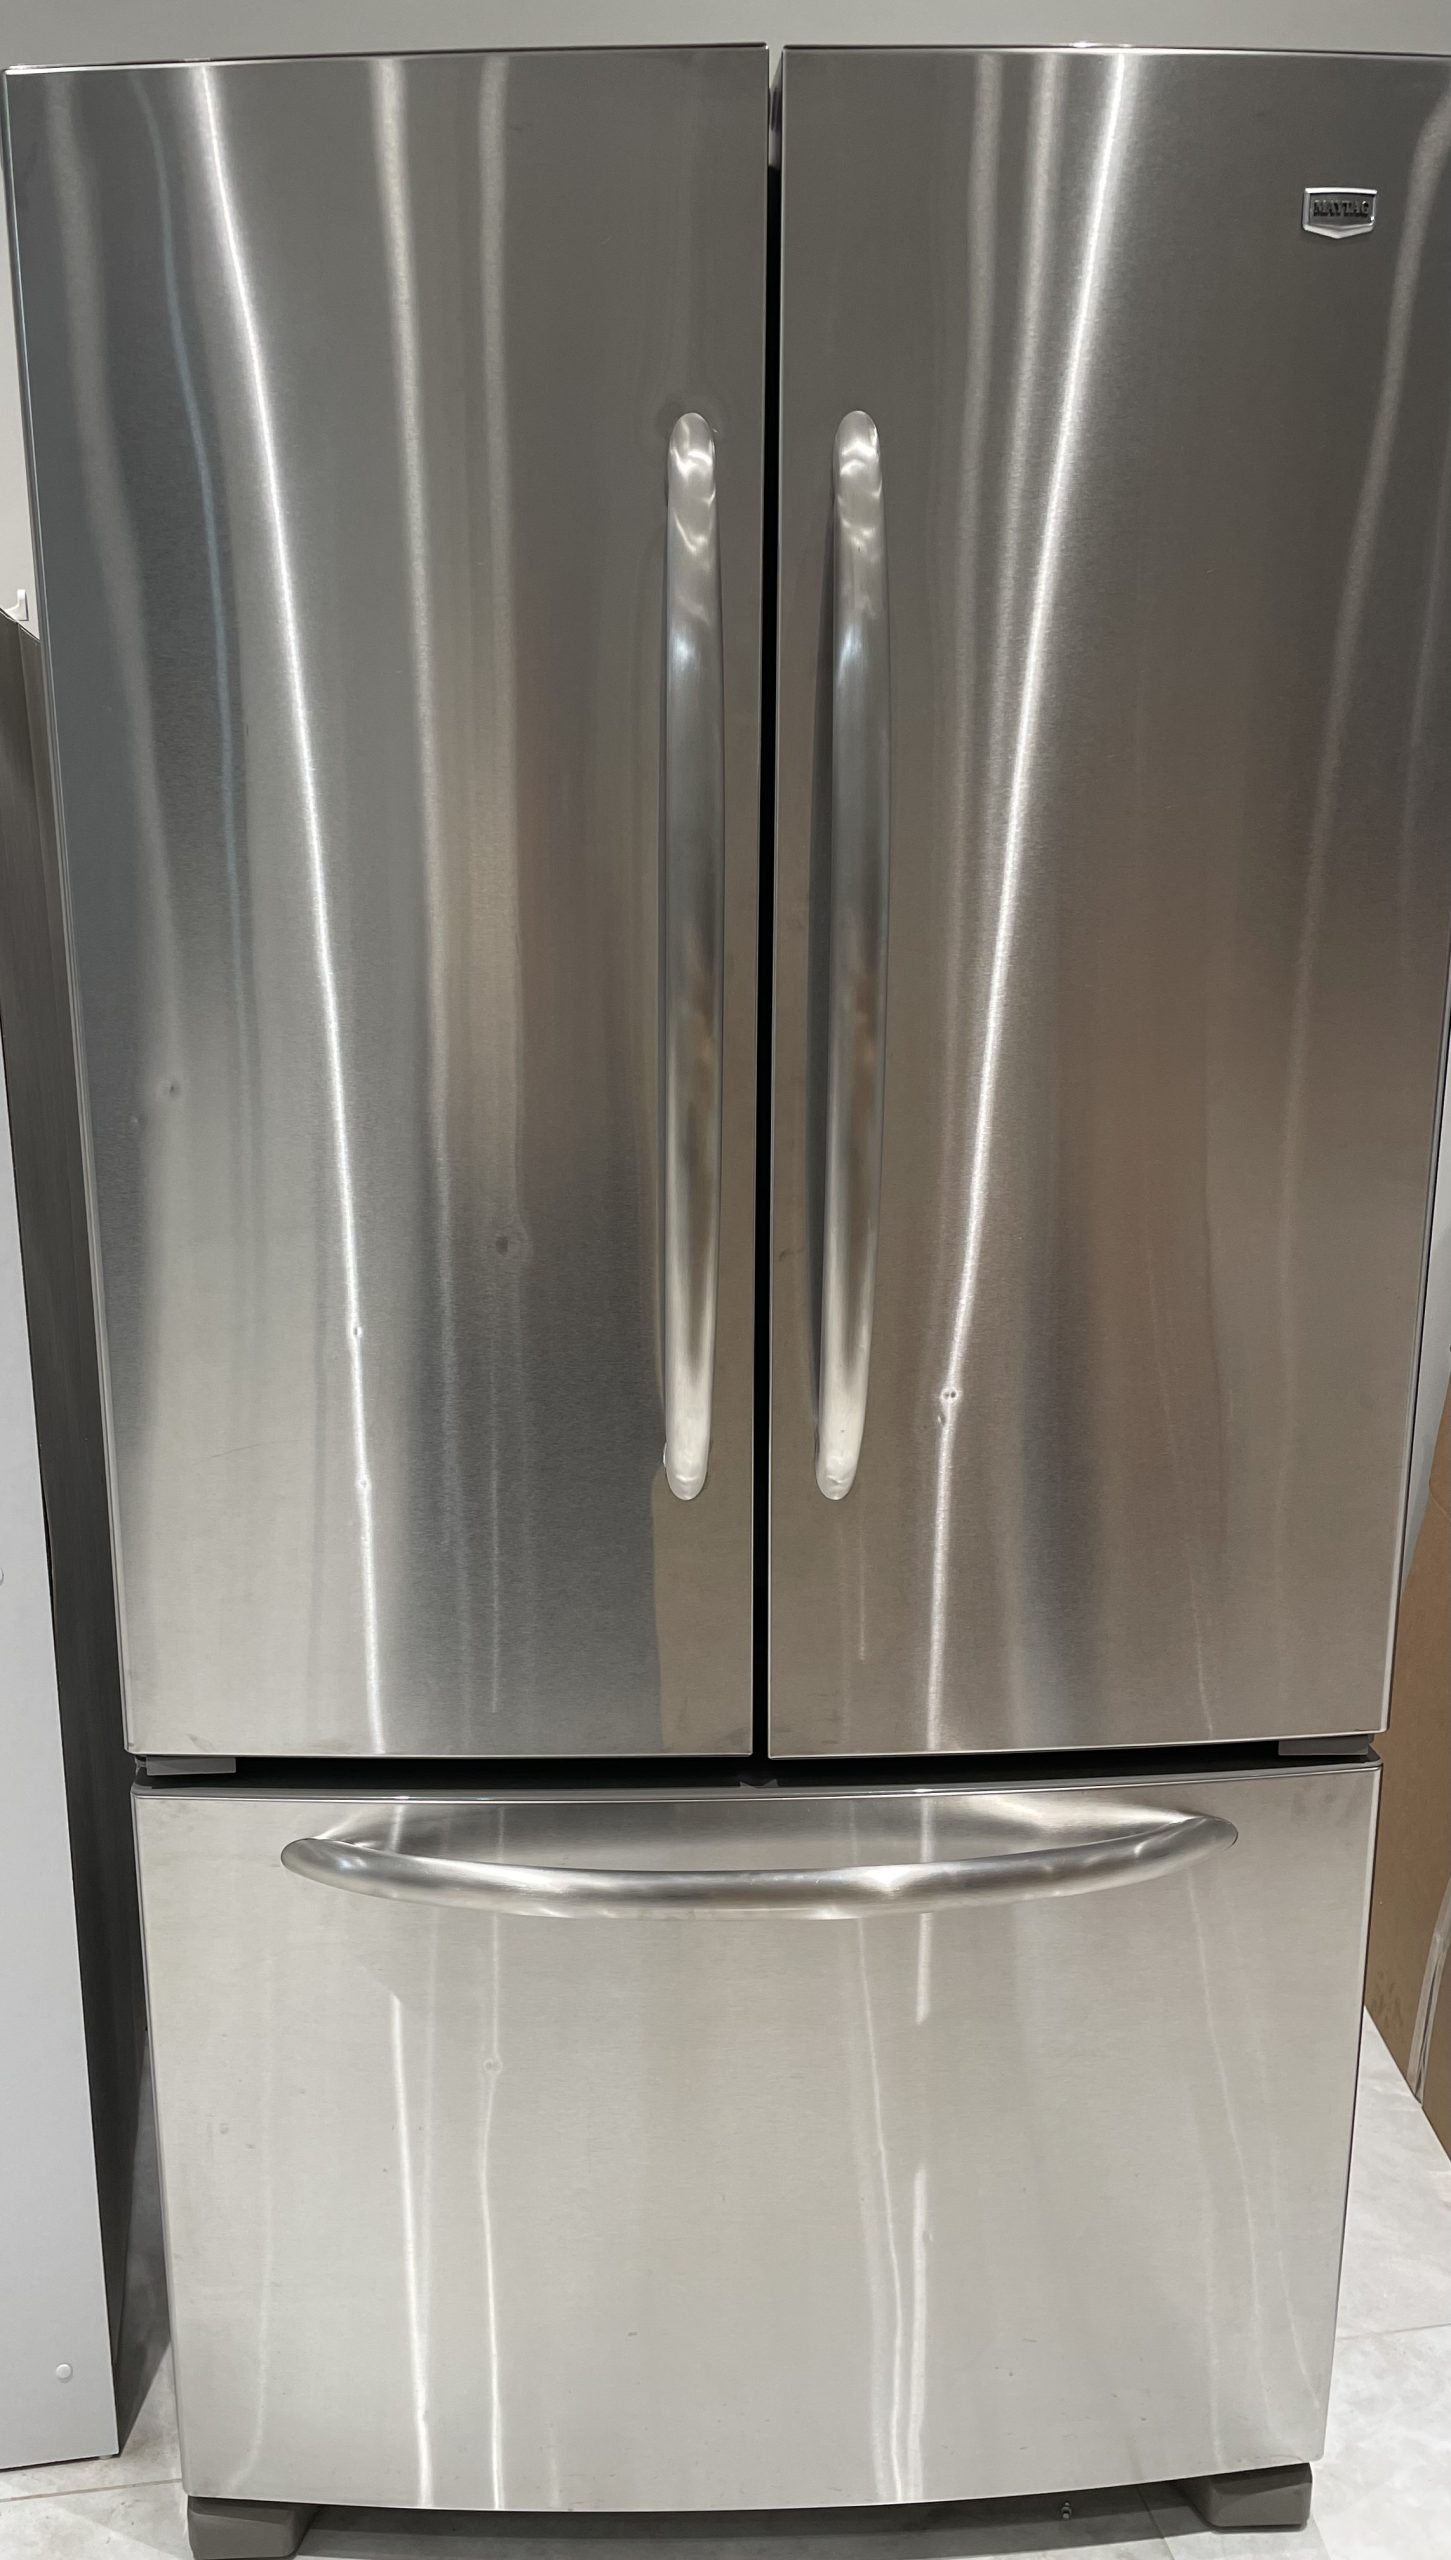 Maytag French Door Refrigerator/Freezer